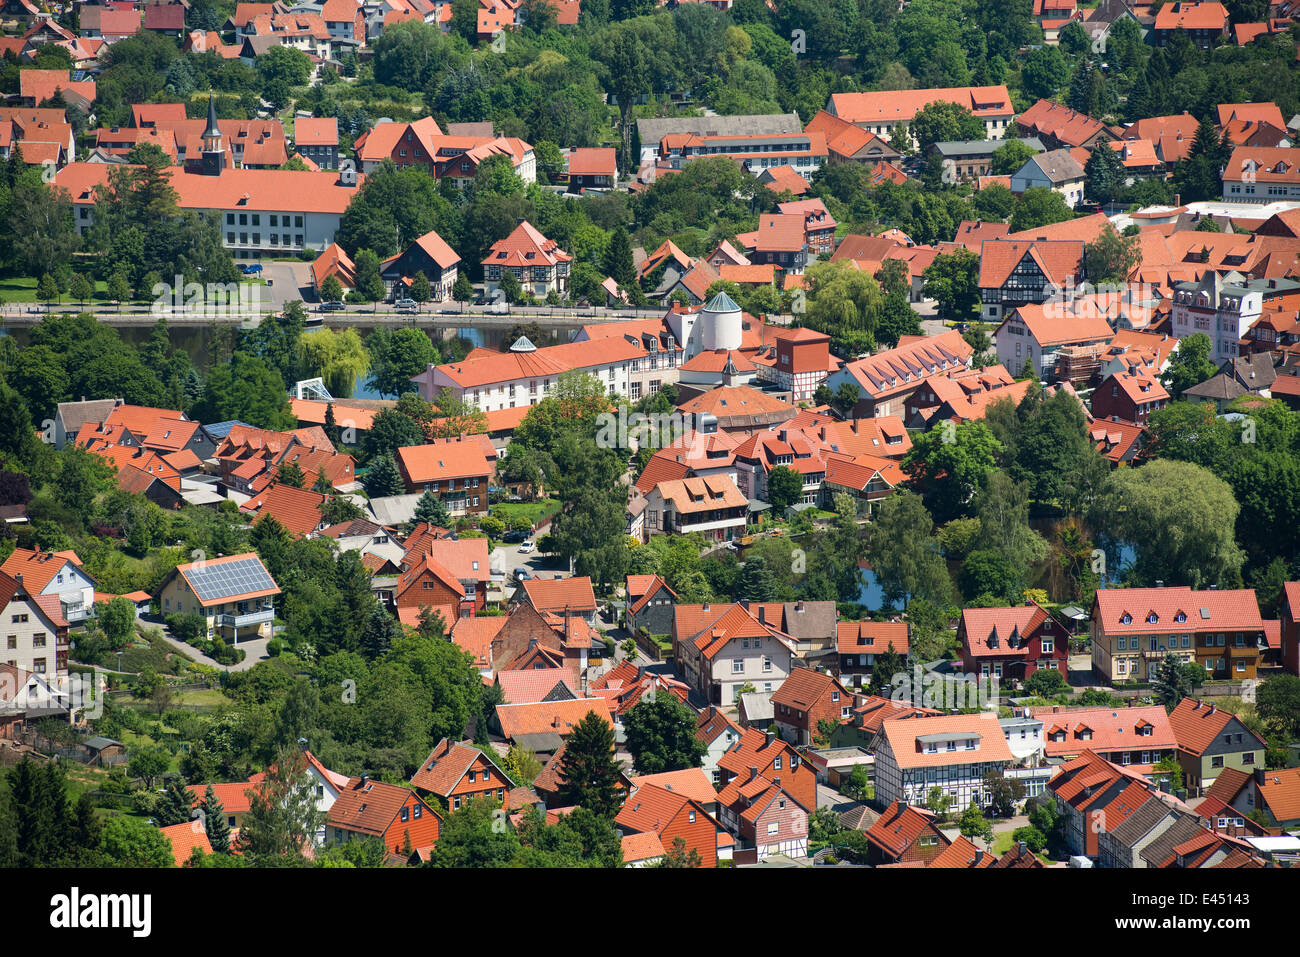 View of the town of Ilsenburg, Harz, Saxony-Anhalt, Germany Stock Photo